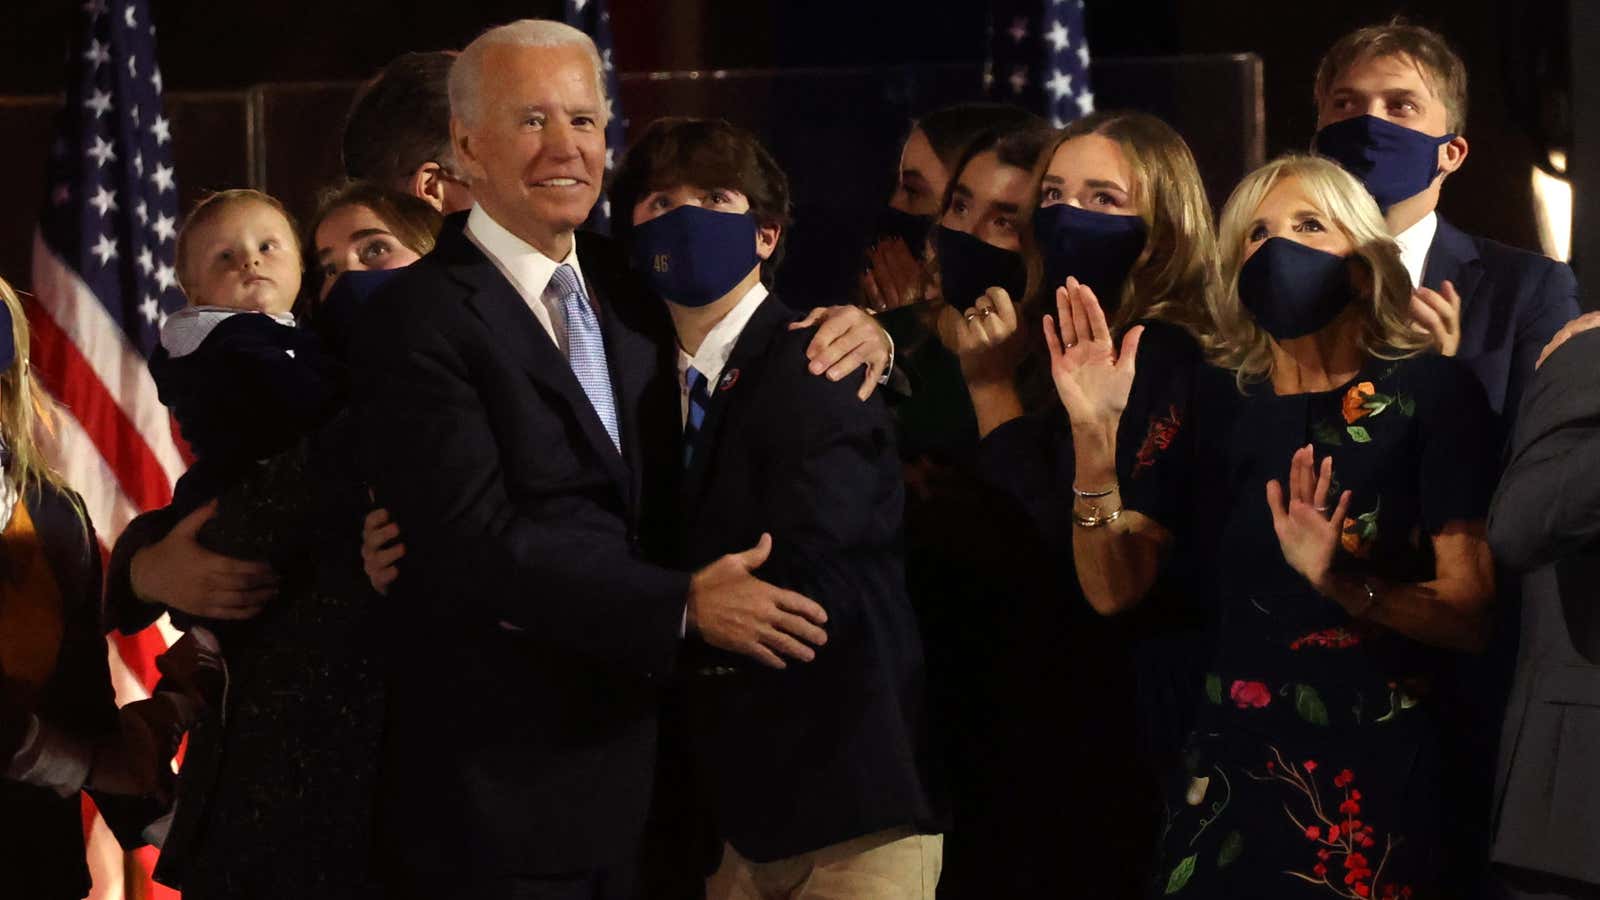 Meet Joe Biden’s family.